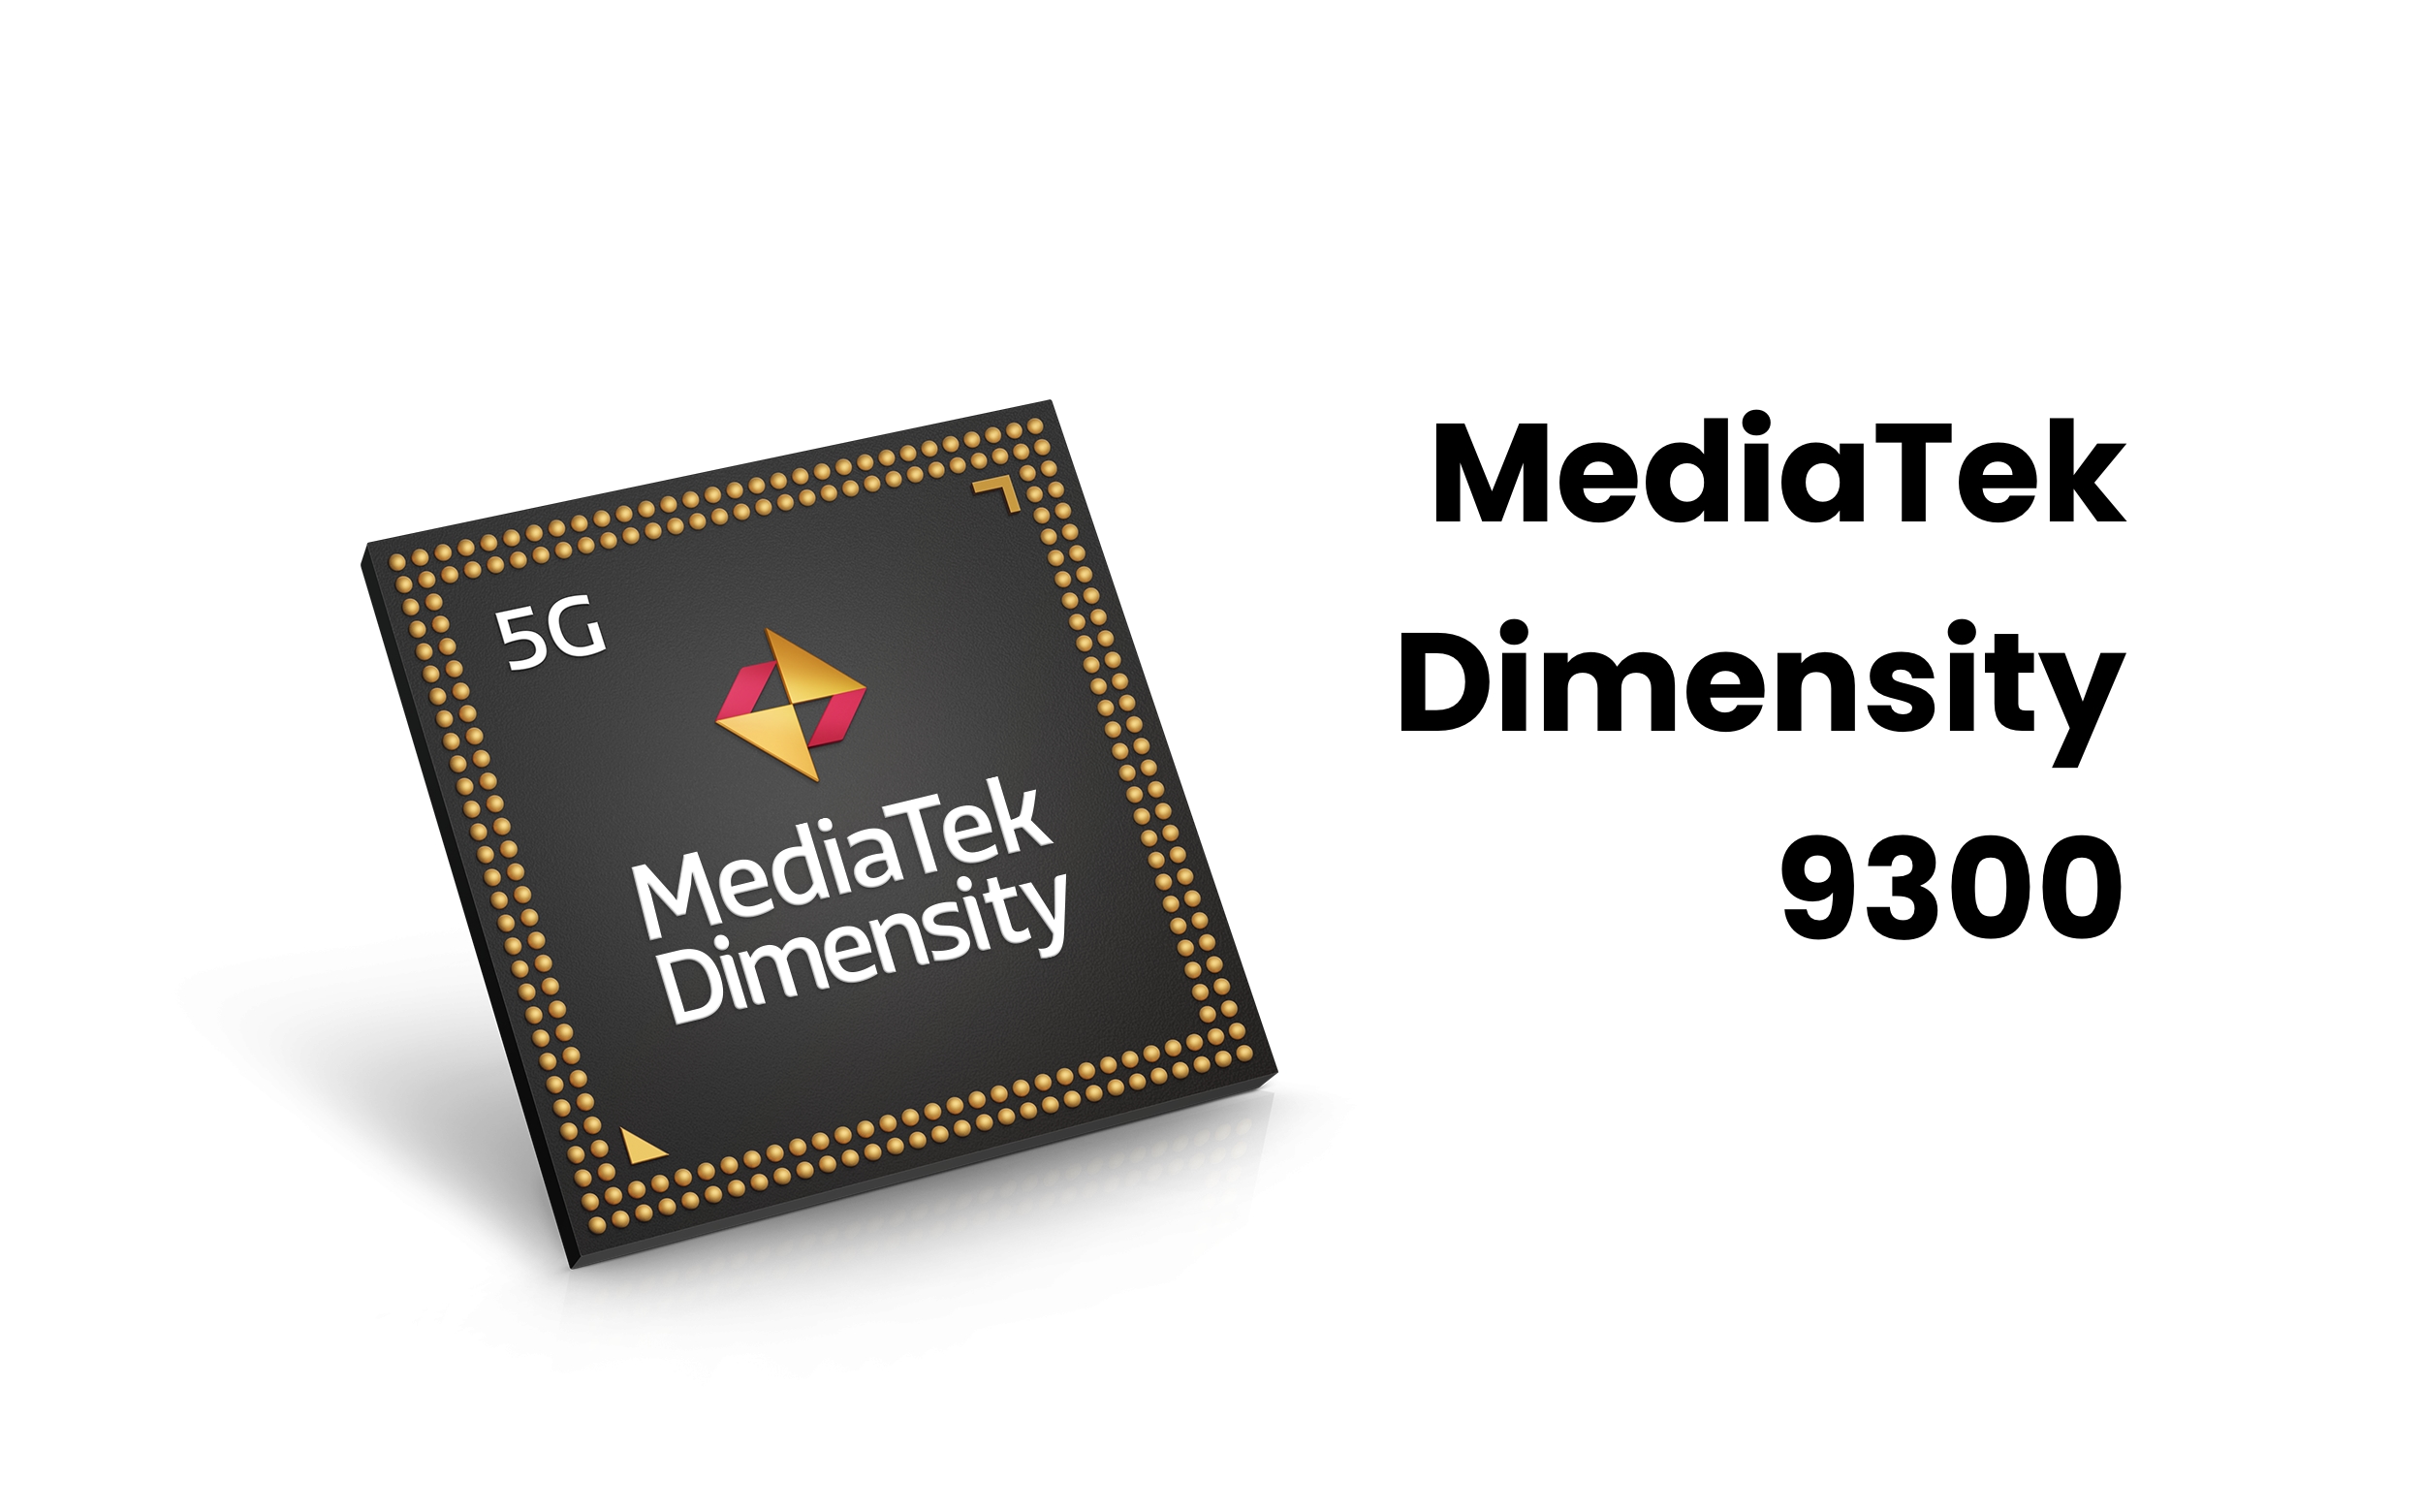 Mediatek Dimensity 9300 smartphones